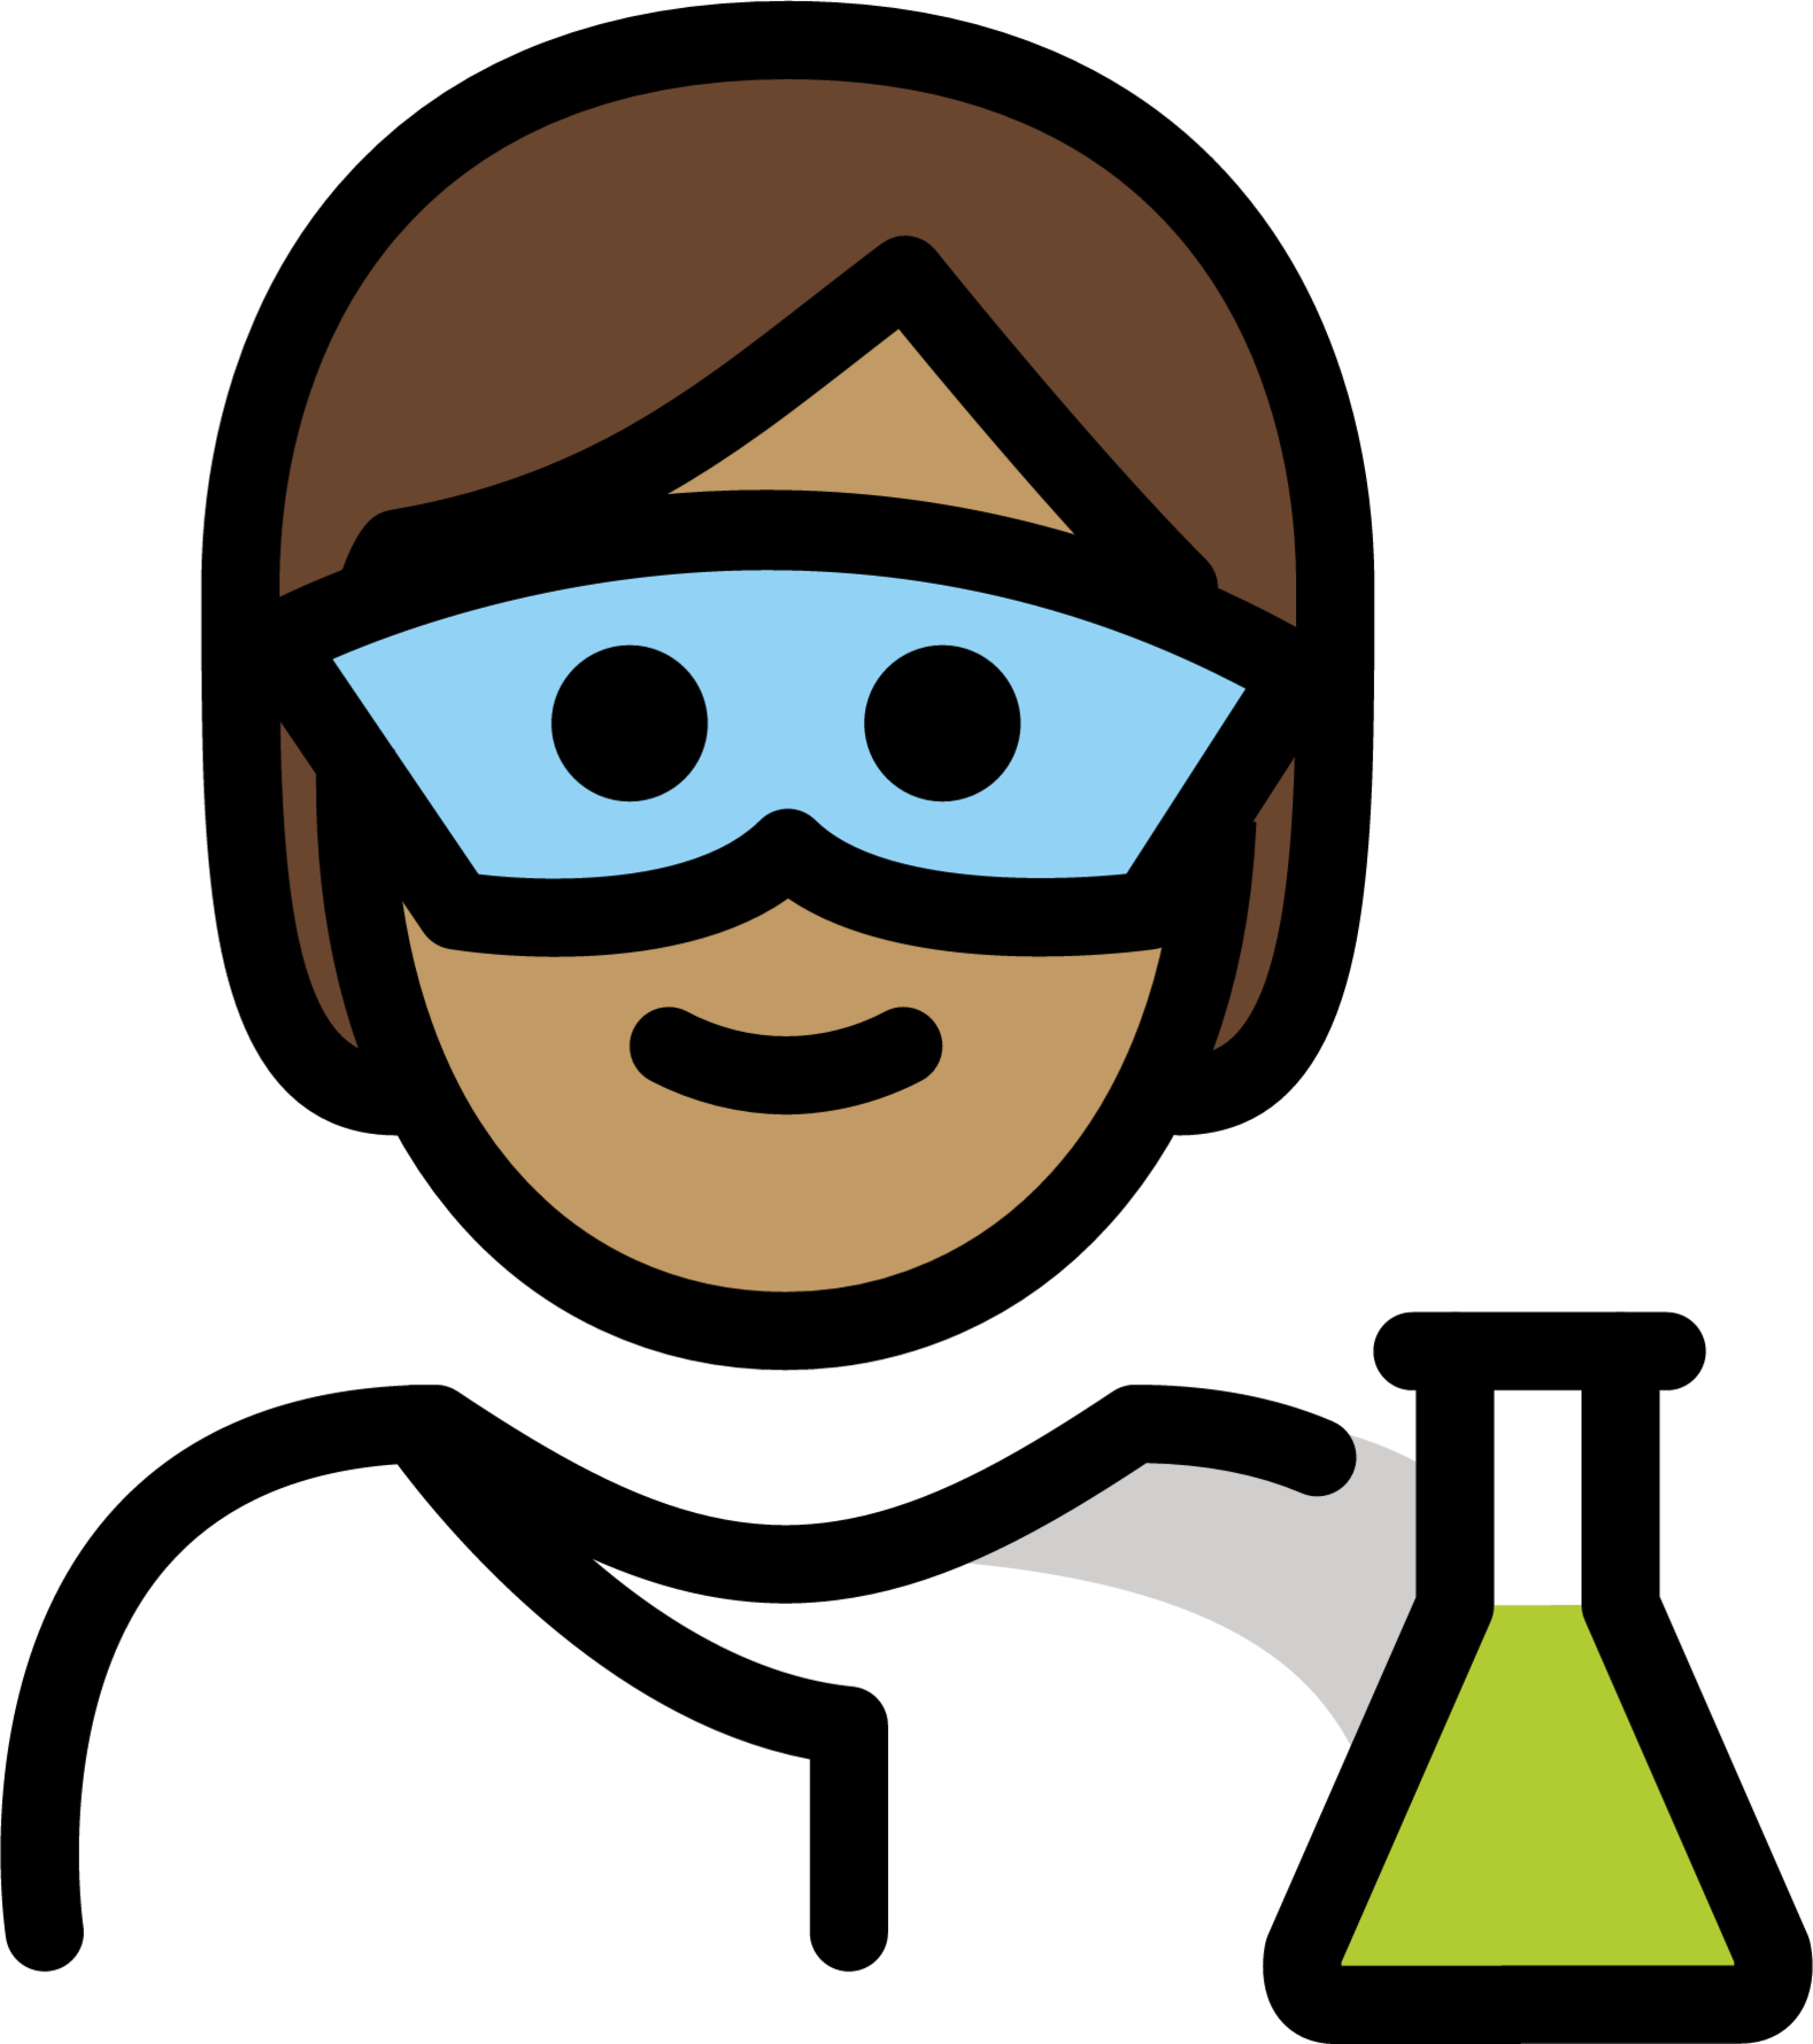 scientist: medium skin tone emoji